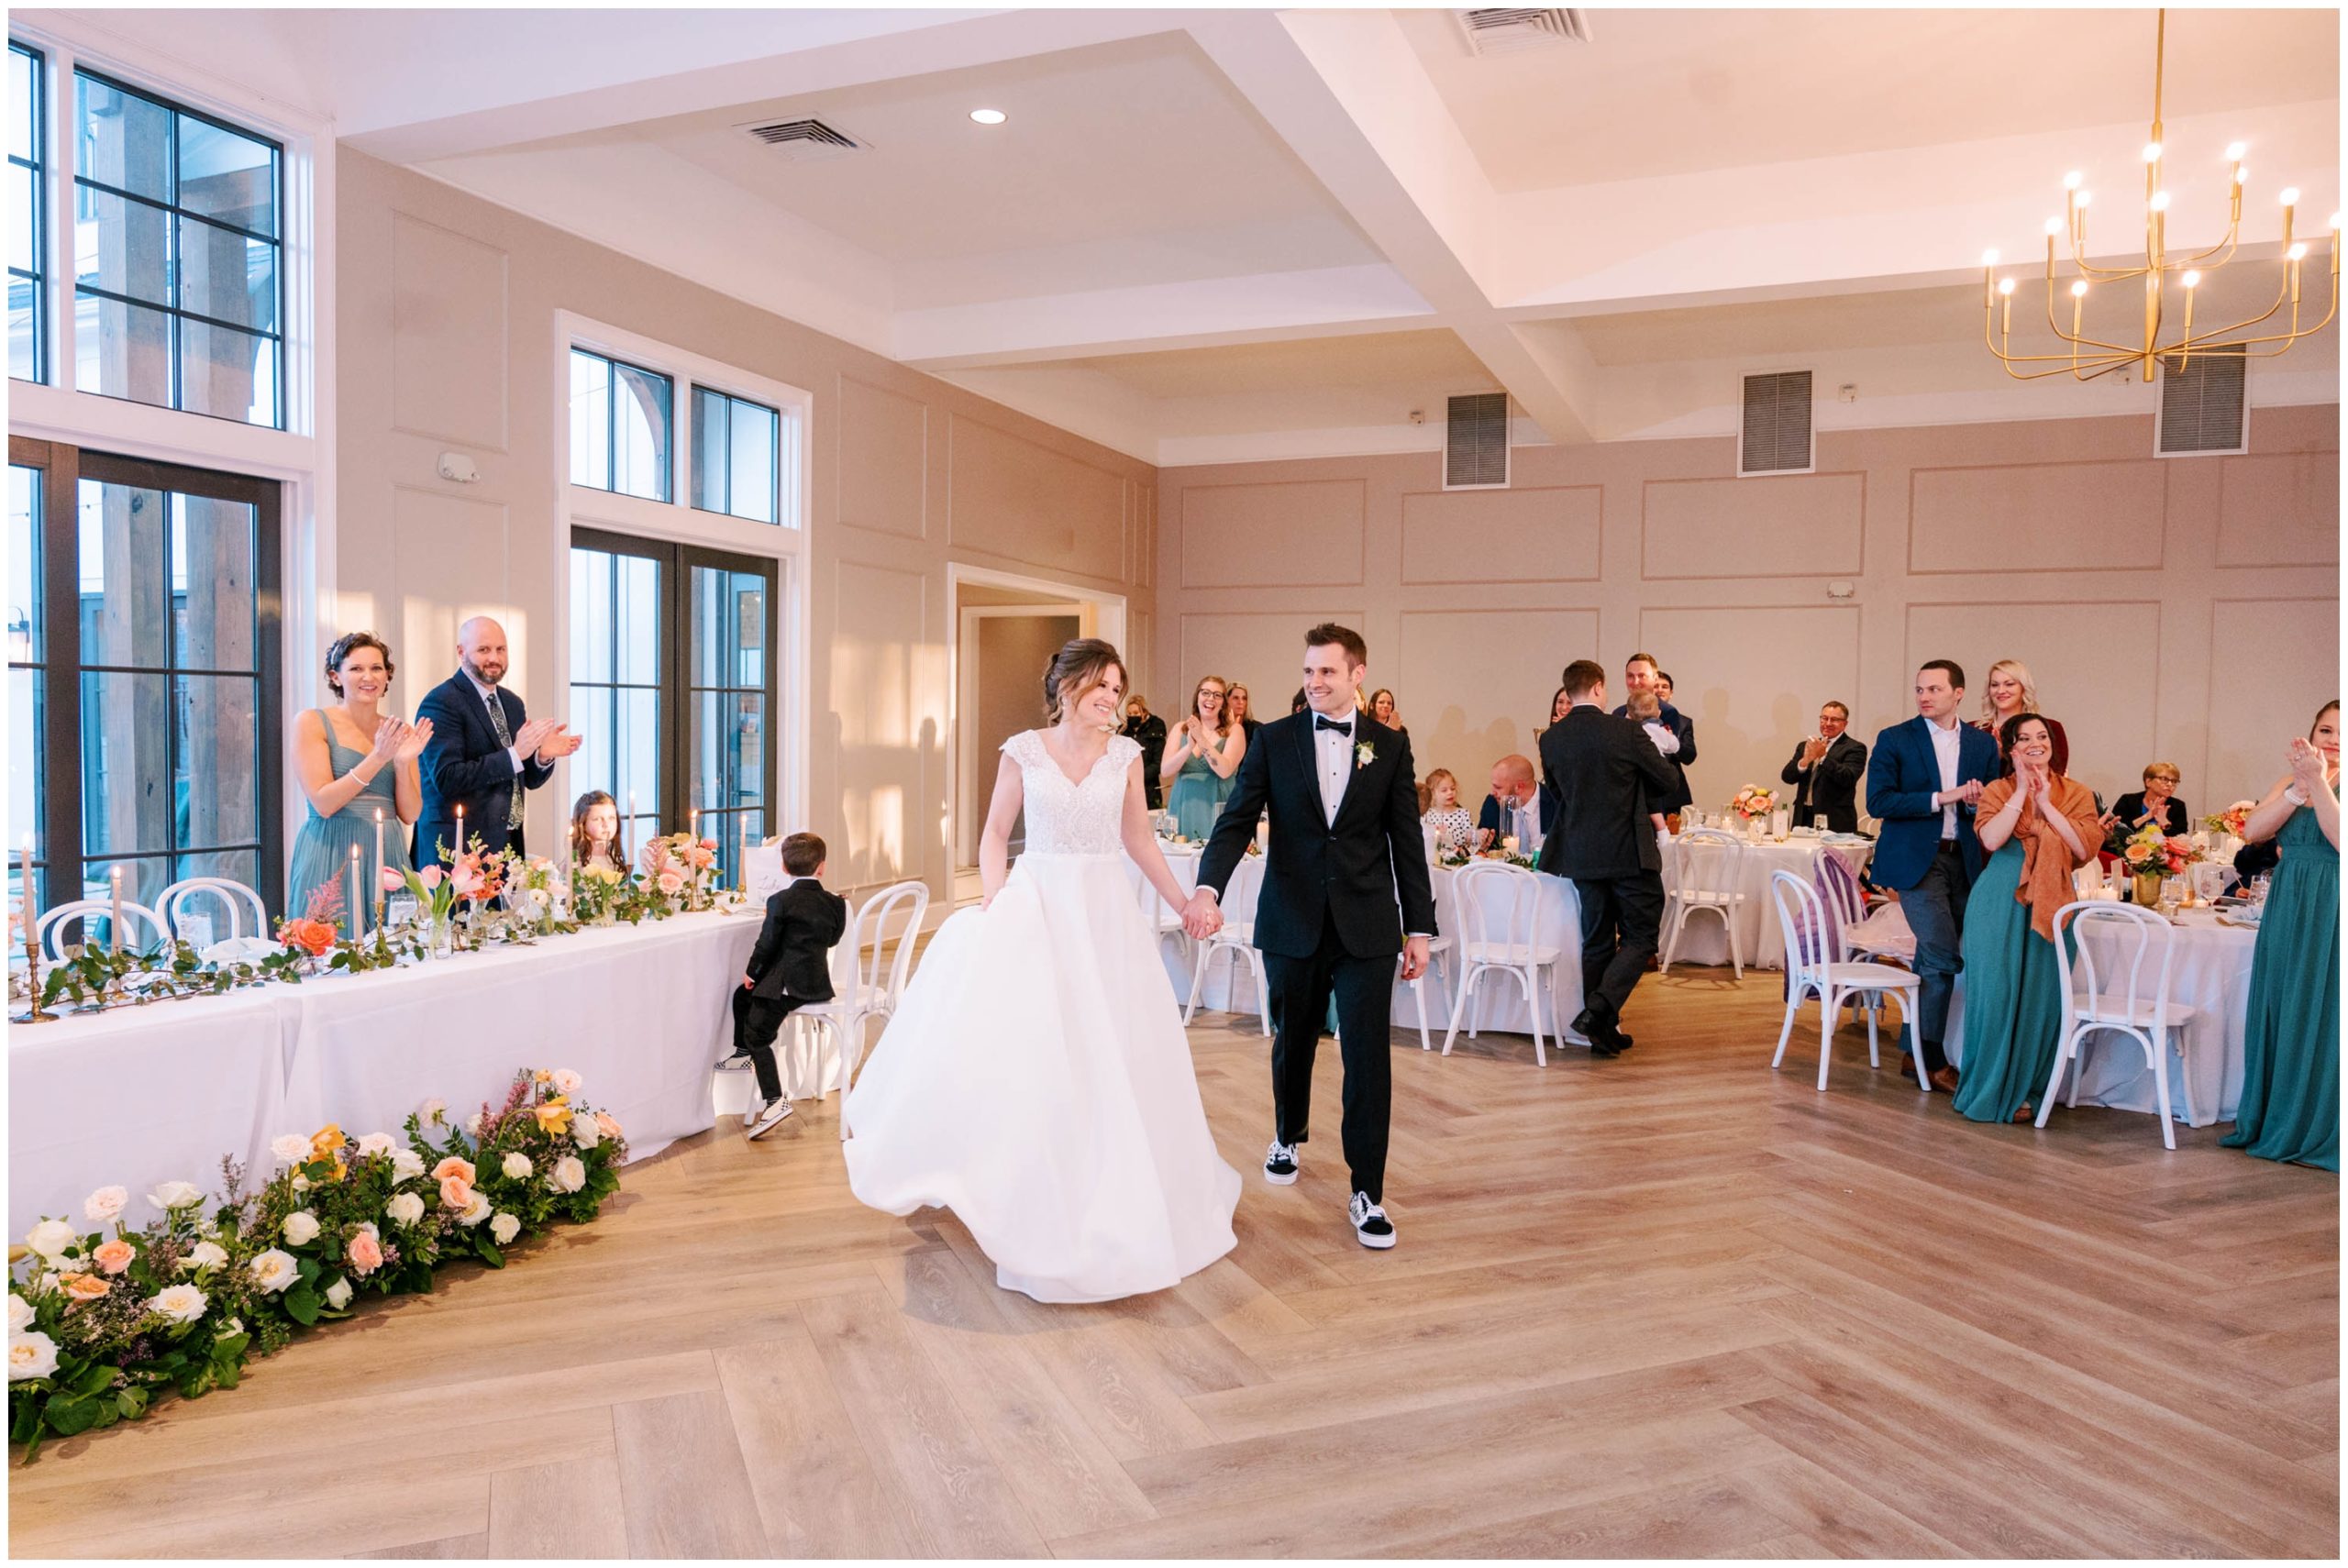 Indoor wedding reception at The Bradford